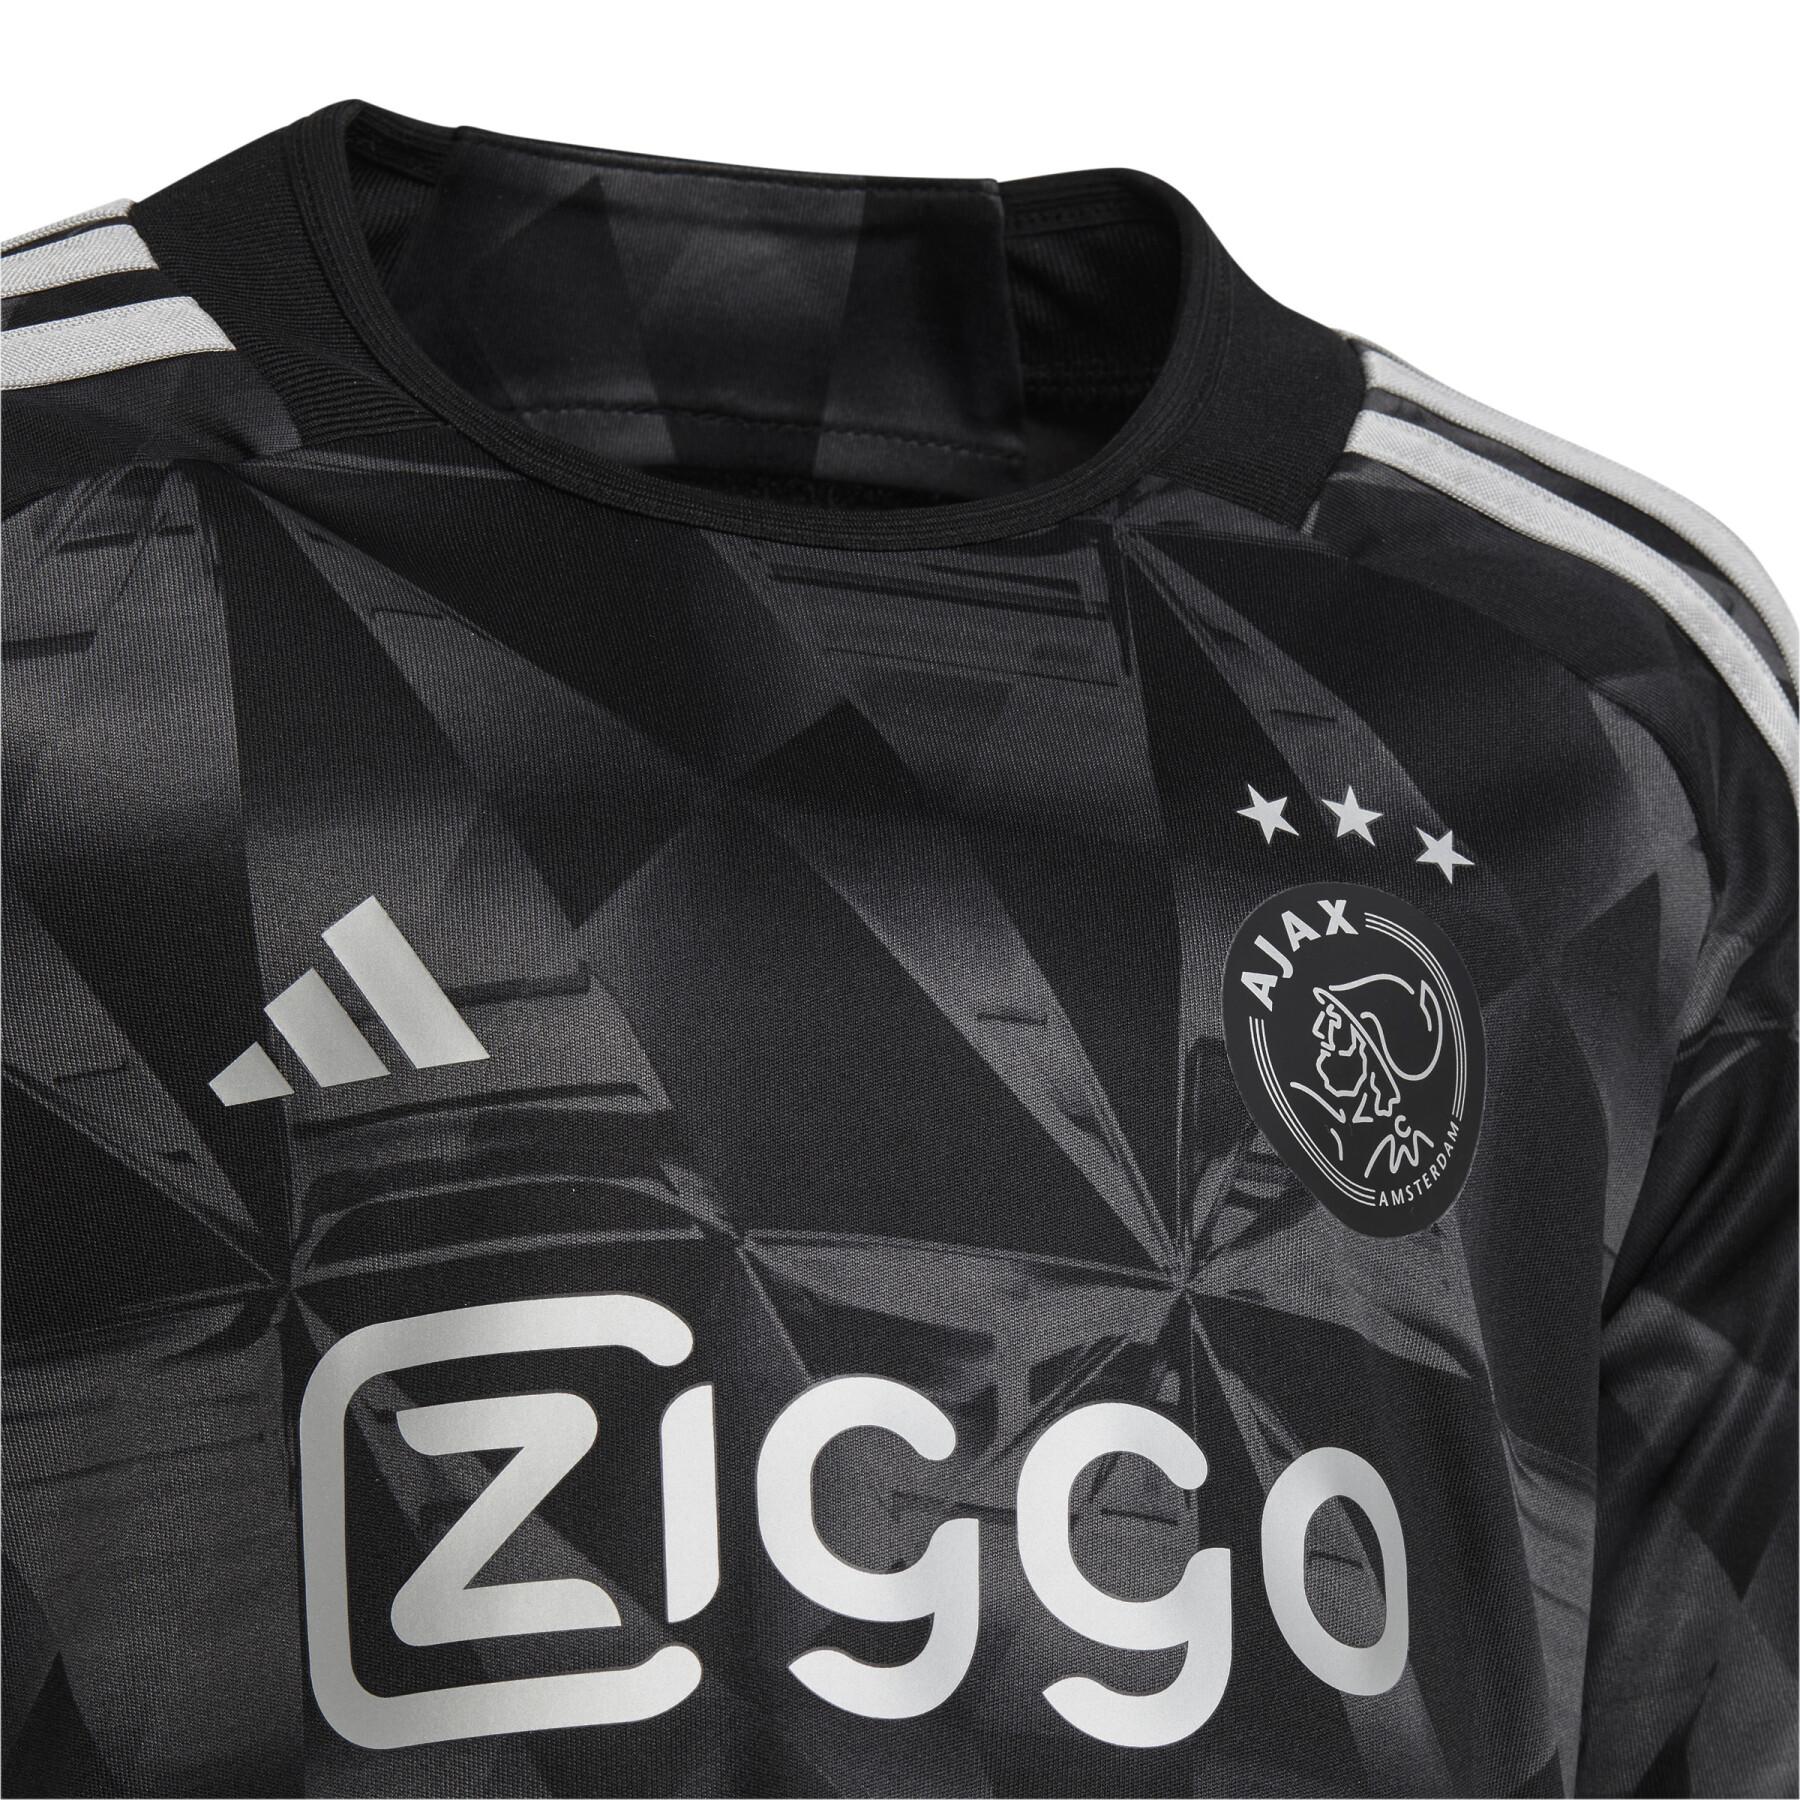 Mini-kit Third enfant Ajax Amsterdam 2023/24